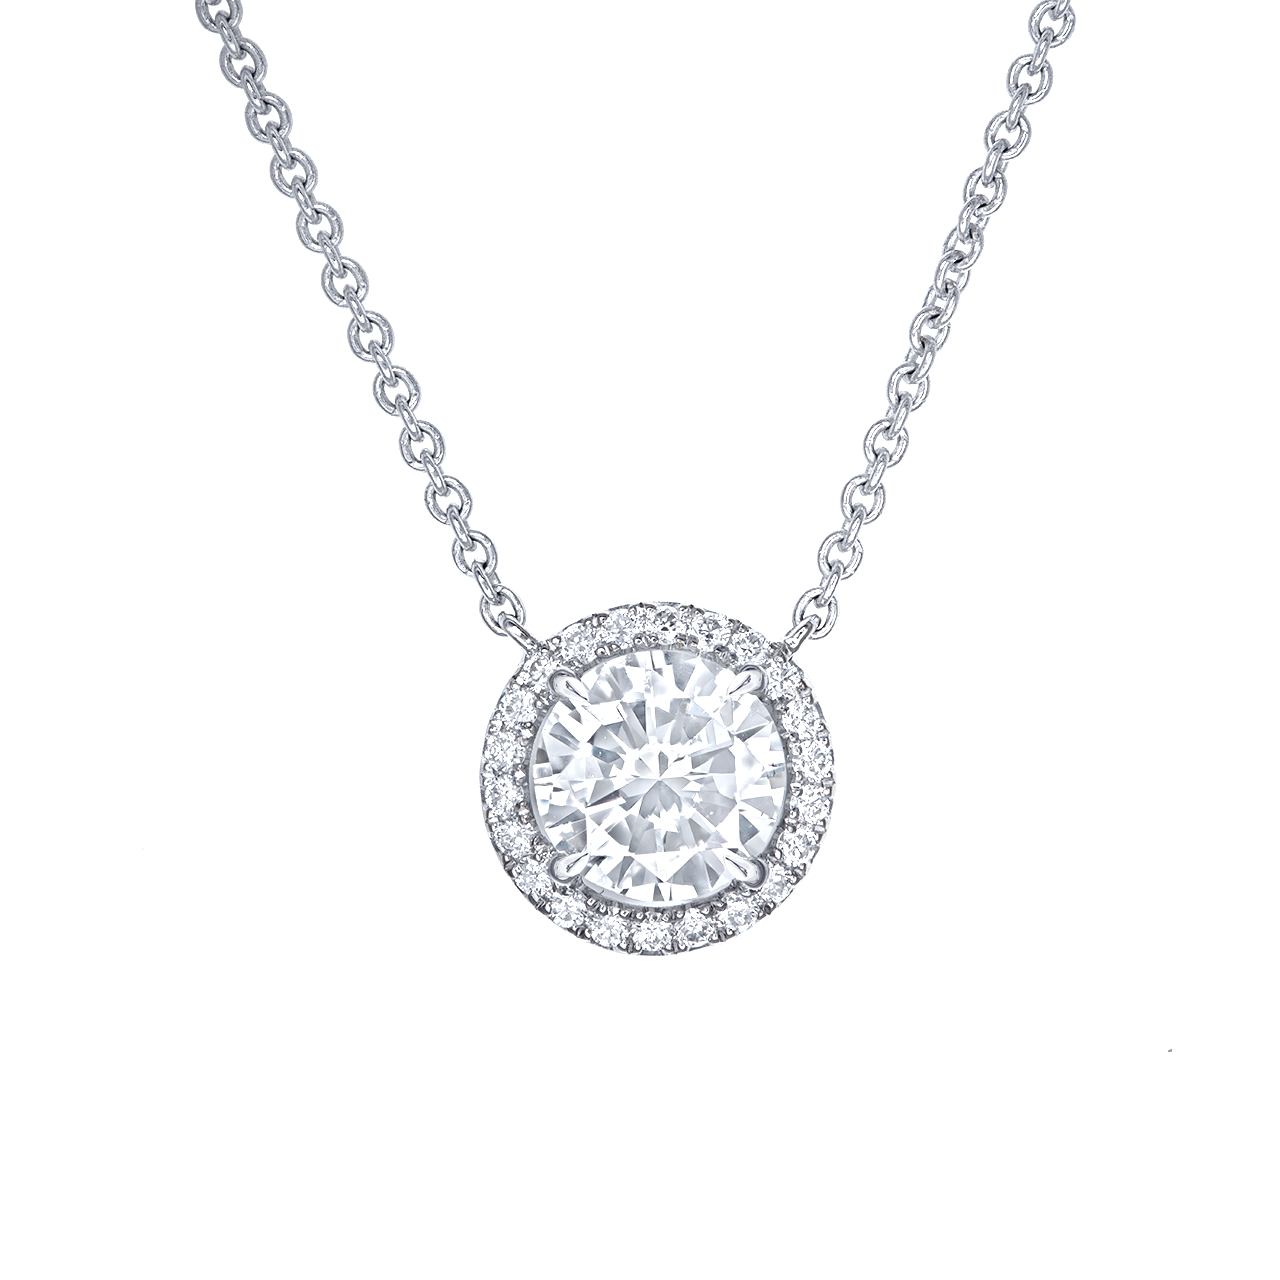 GIA 1.24克拉 奶鑽墜鍊
Fancy White Diamond Pendant Necklace